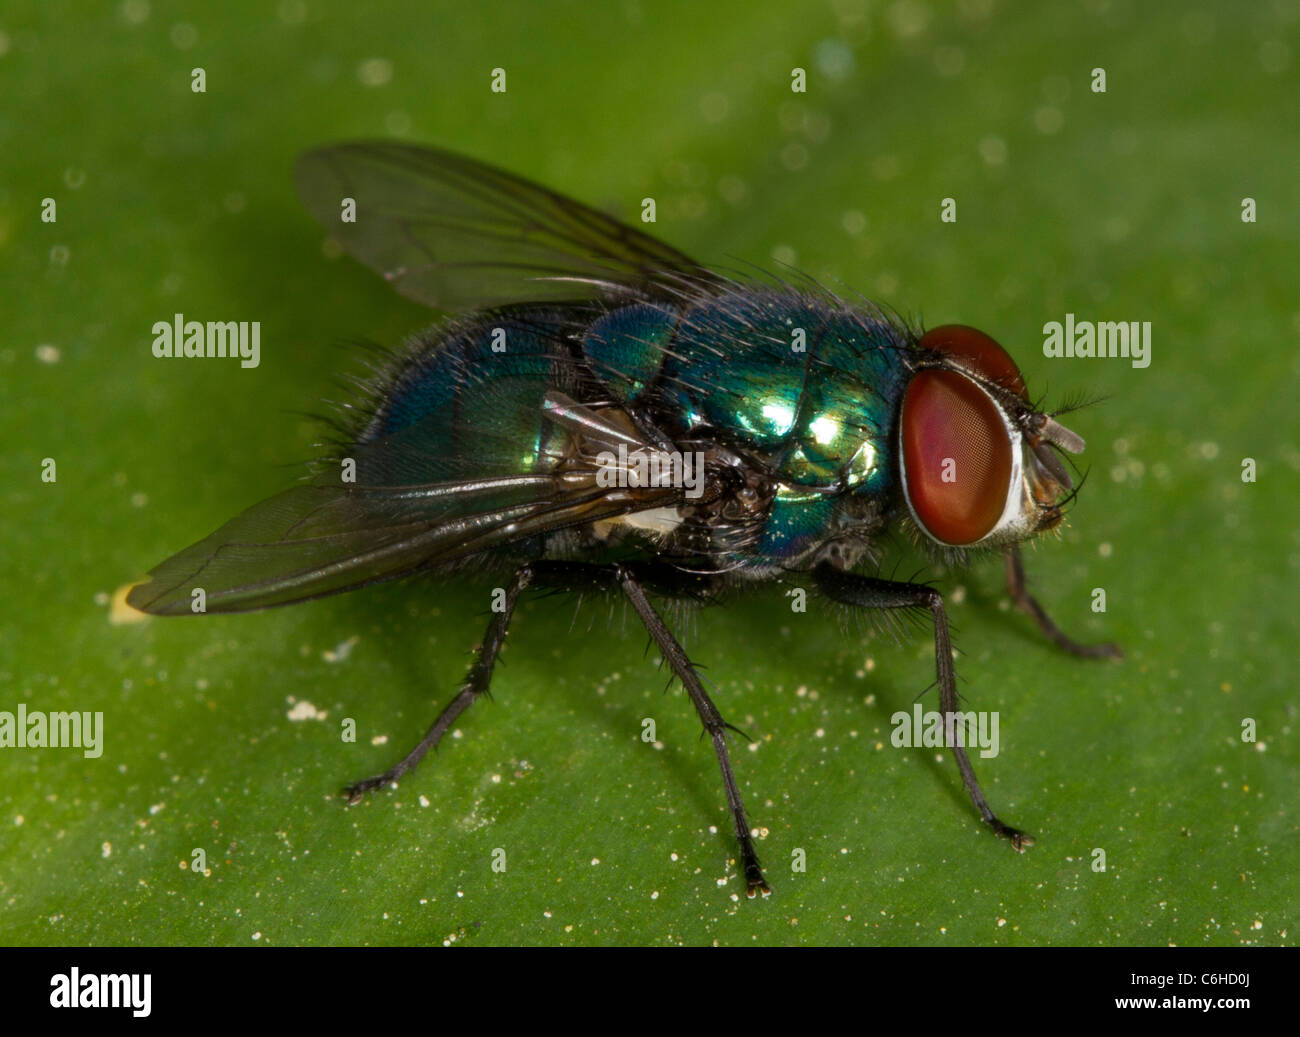 Greenbottle mosca Lucilia sericata Paenicia (o), un común blowfly. Utilizado por los entomólogos forenses para determinar la edad de los cadáveres. Foto de stock